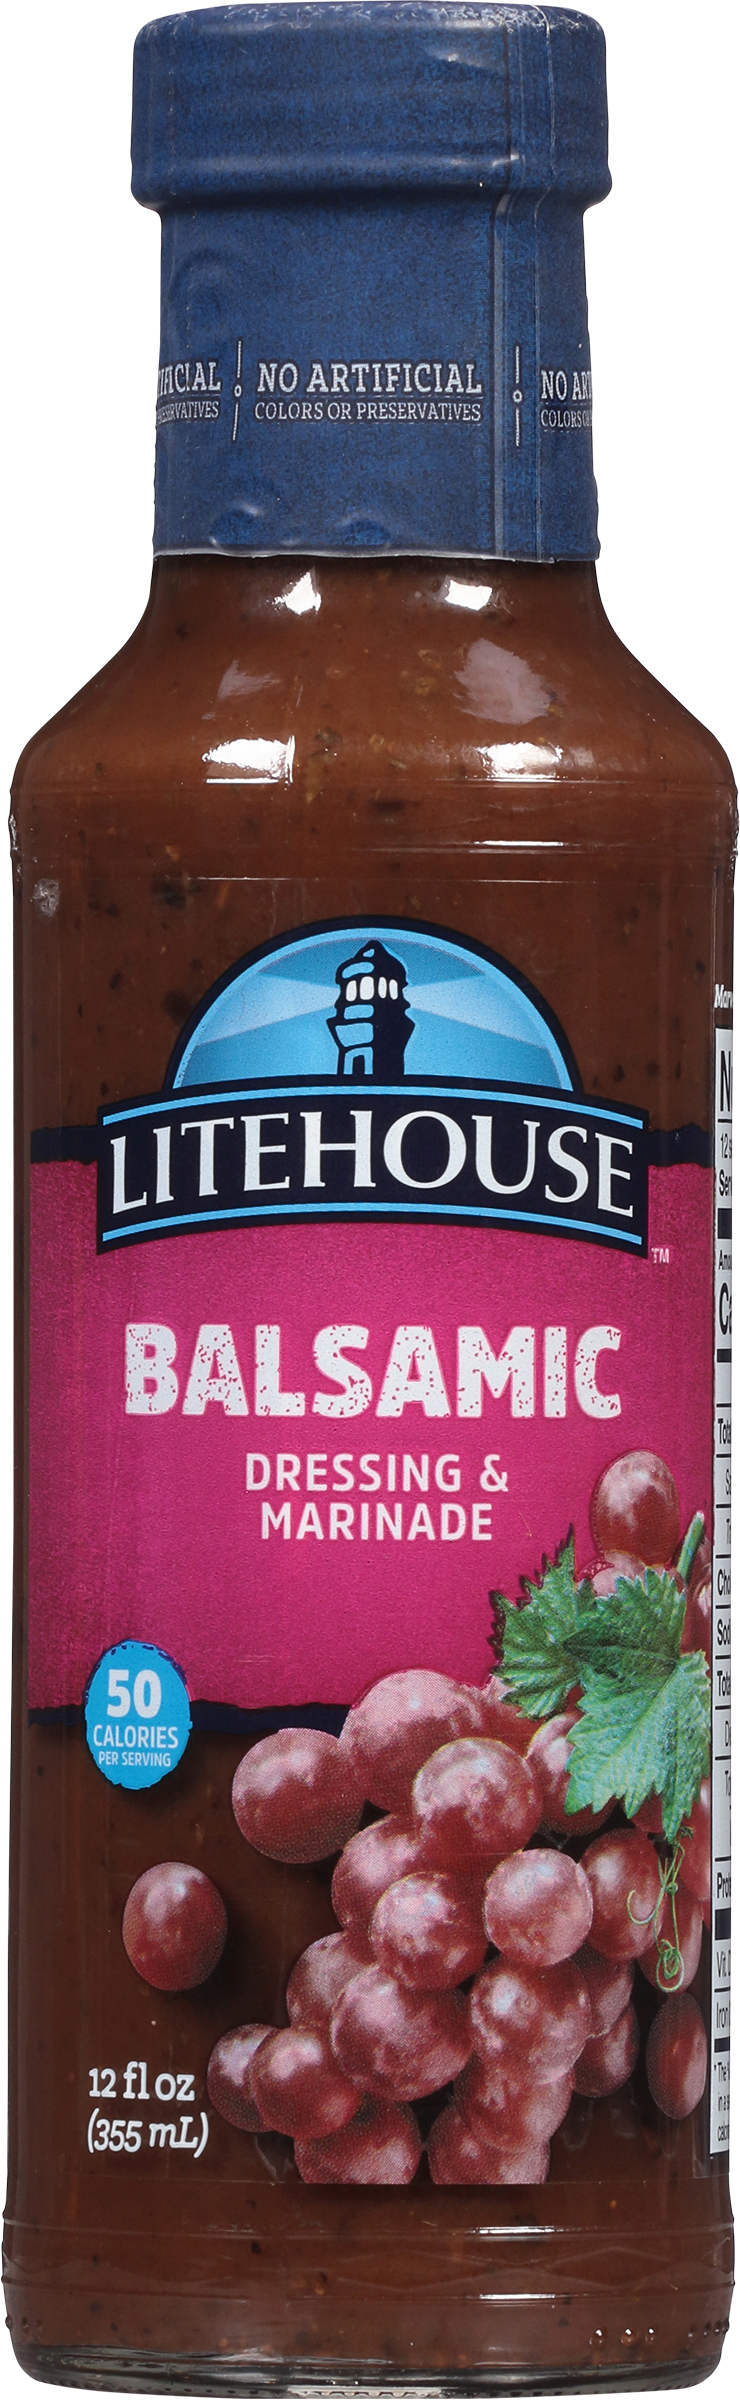 Litehouse Balsamic Dressing & Marinade, 12 fl. oz. - image 3 of 4